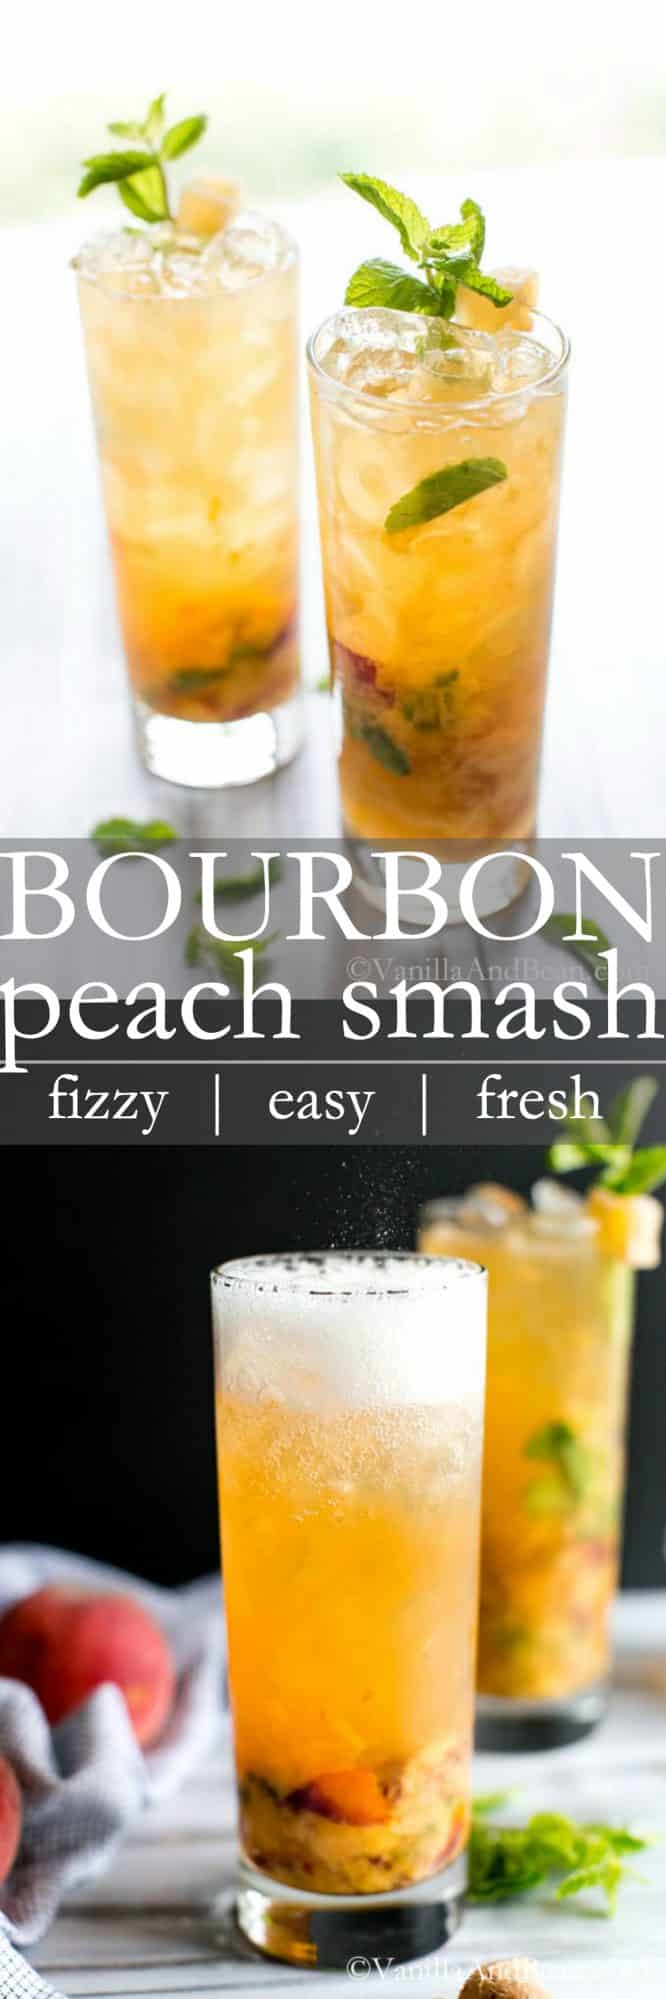 Bourbon Peach Cocktail